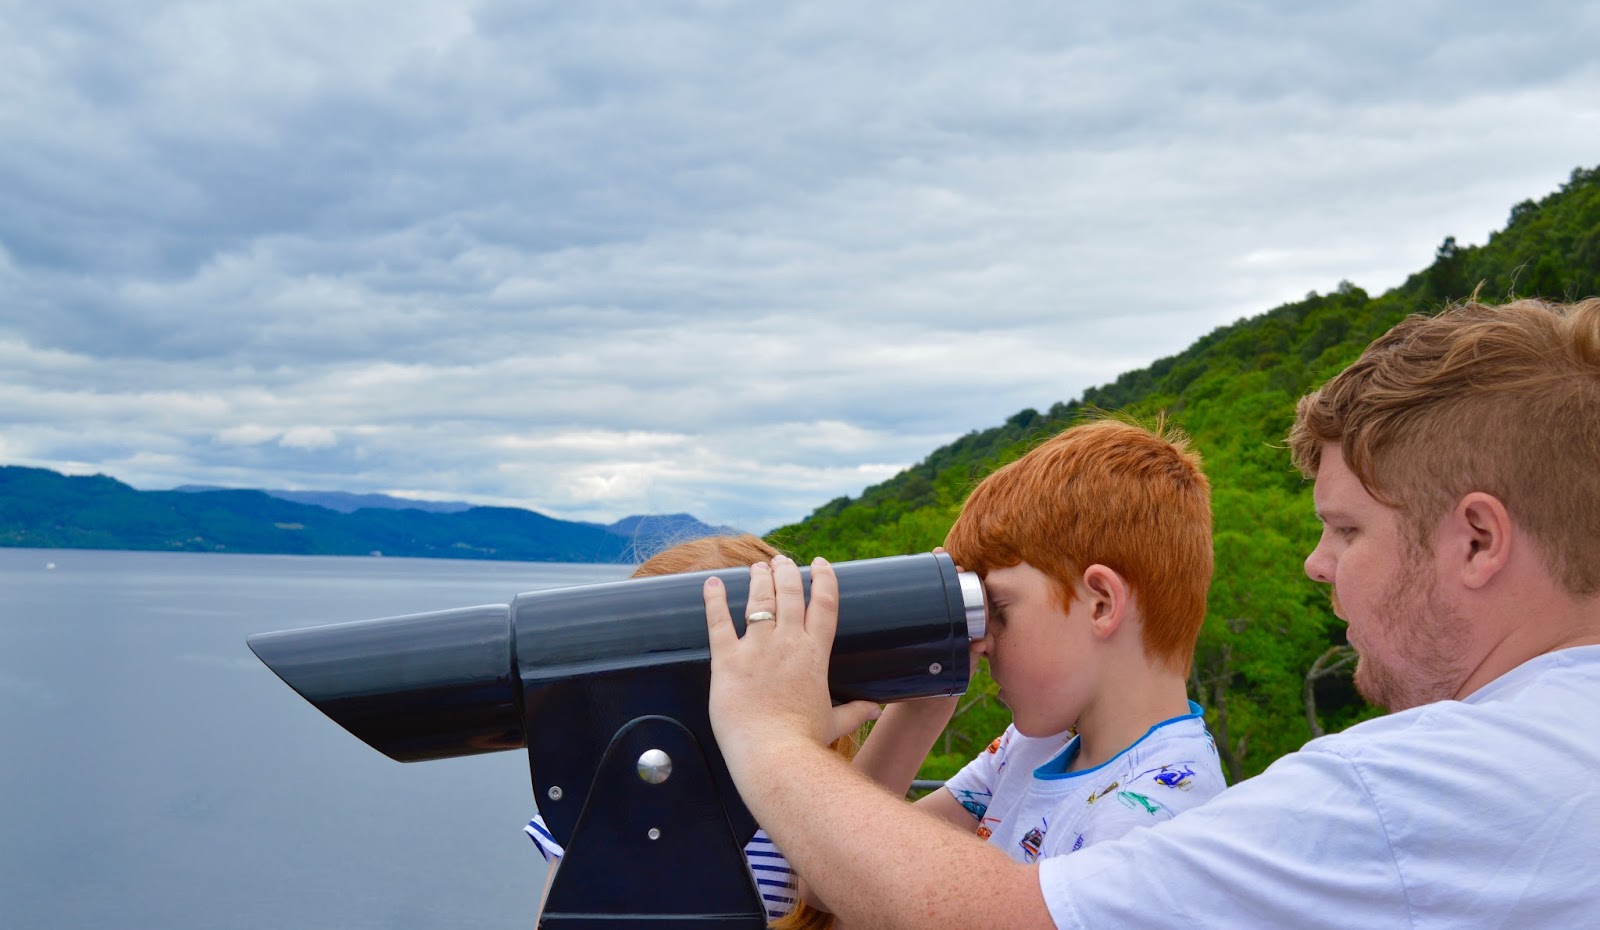 Urquhart Castle, Loch Ness | A Review